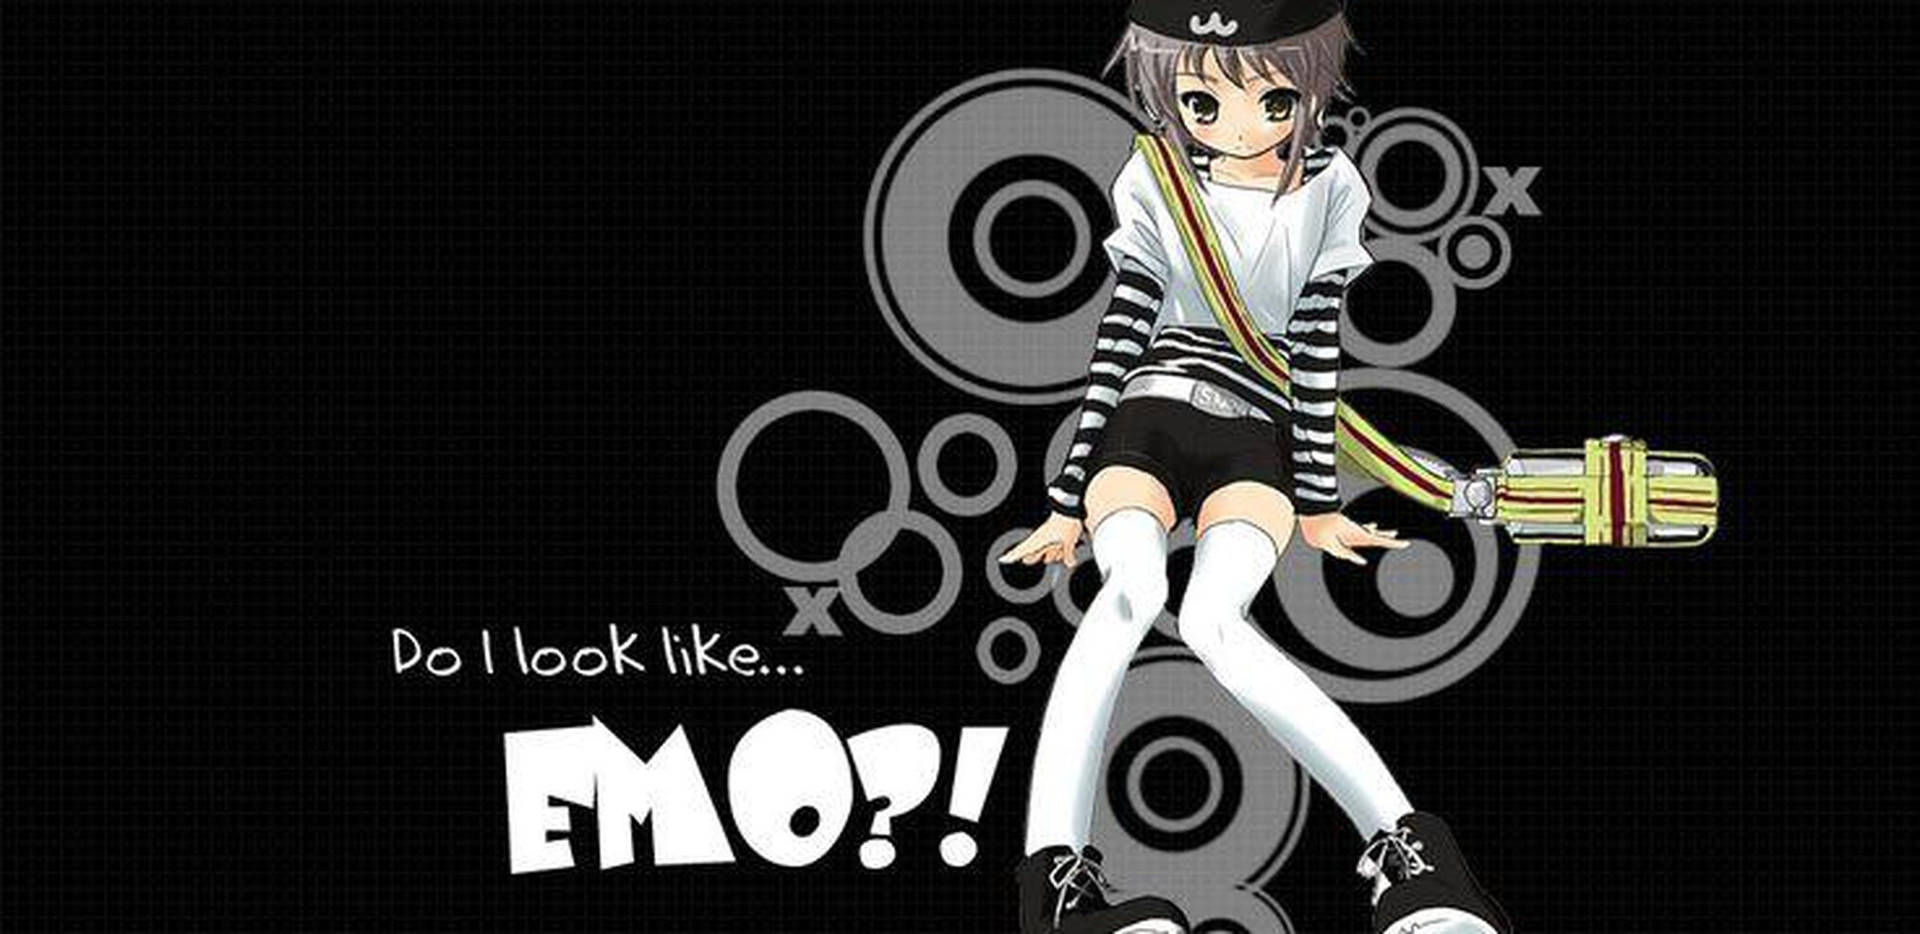 Free Emo Wallpaper Downloads, Emo Wallpaper for FREE